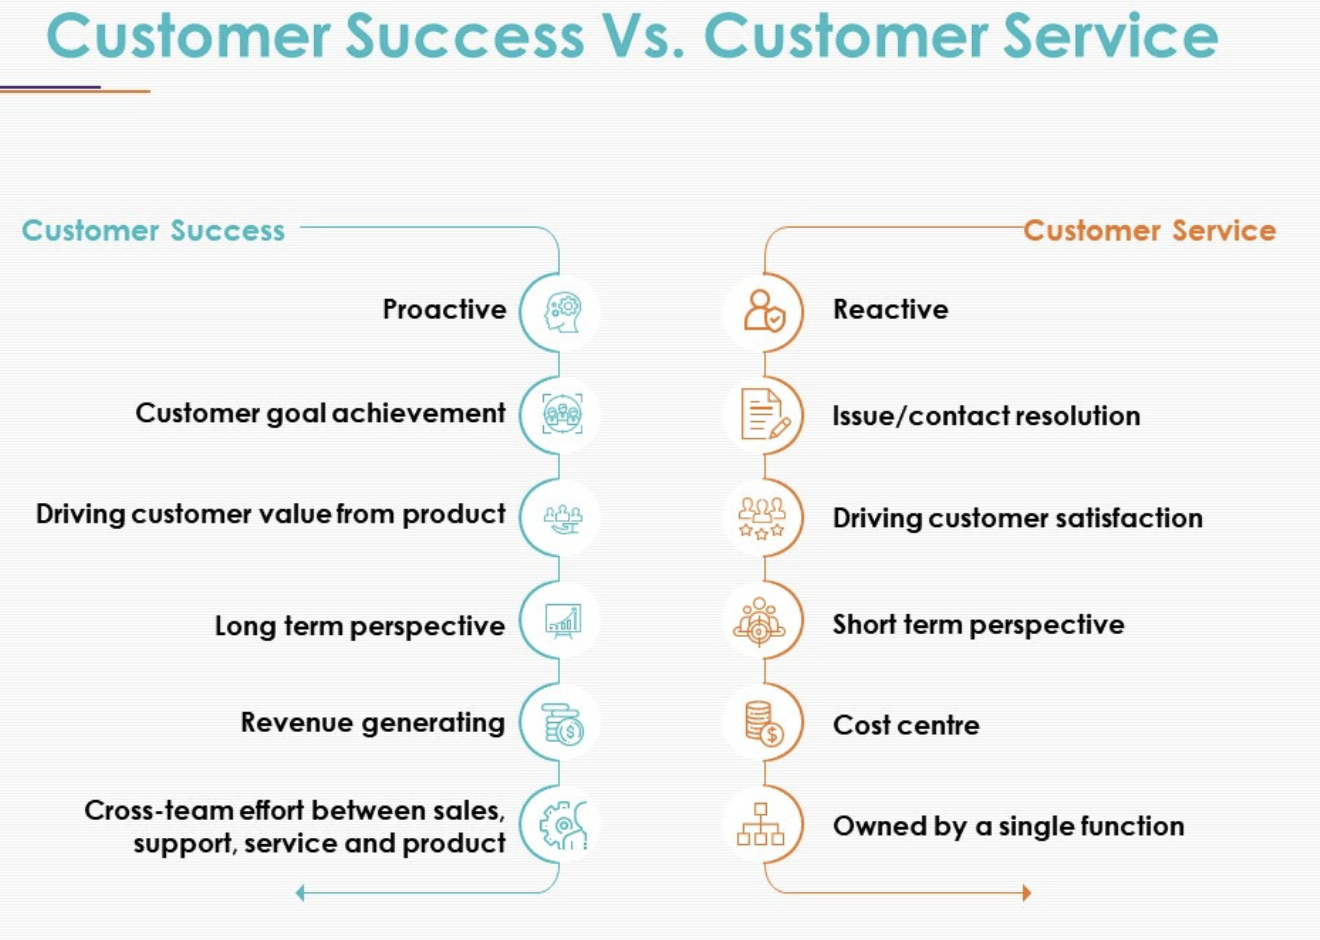 Customer service vs customer success